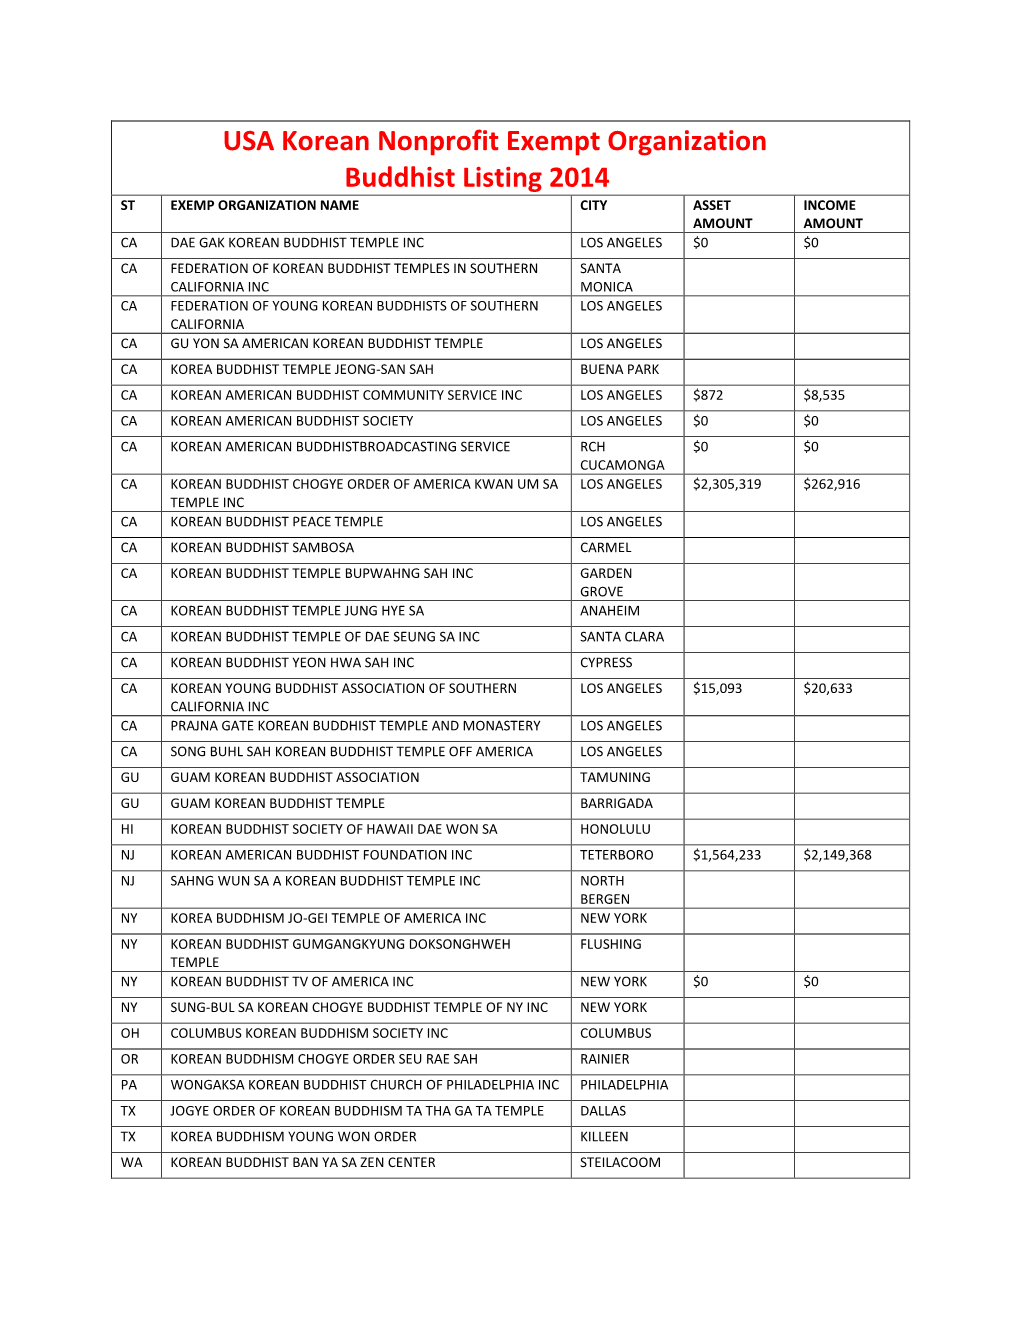 USA Korean Nonprofit Exempt Organization Buddhist Listing 2014